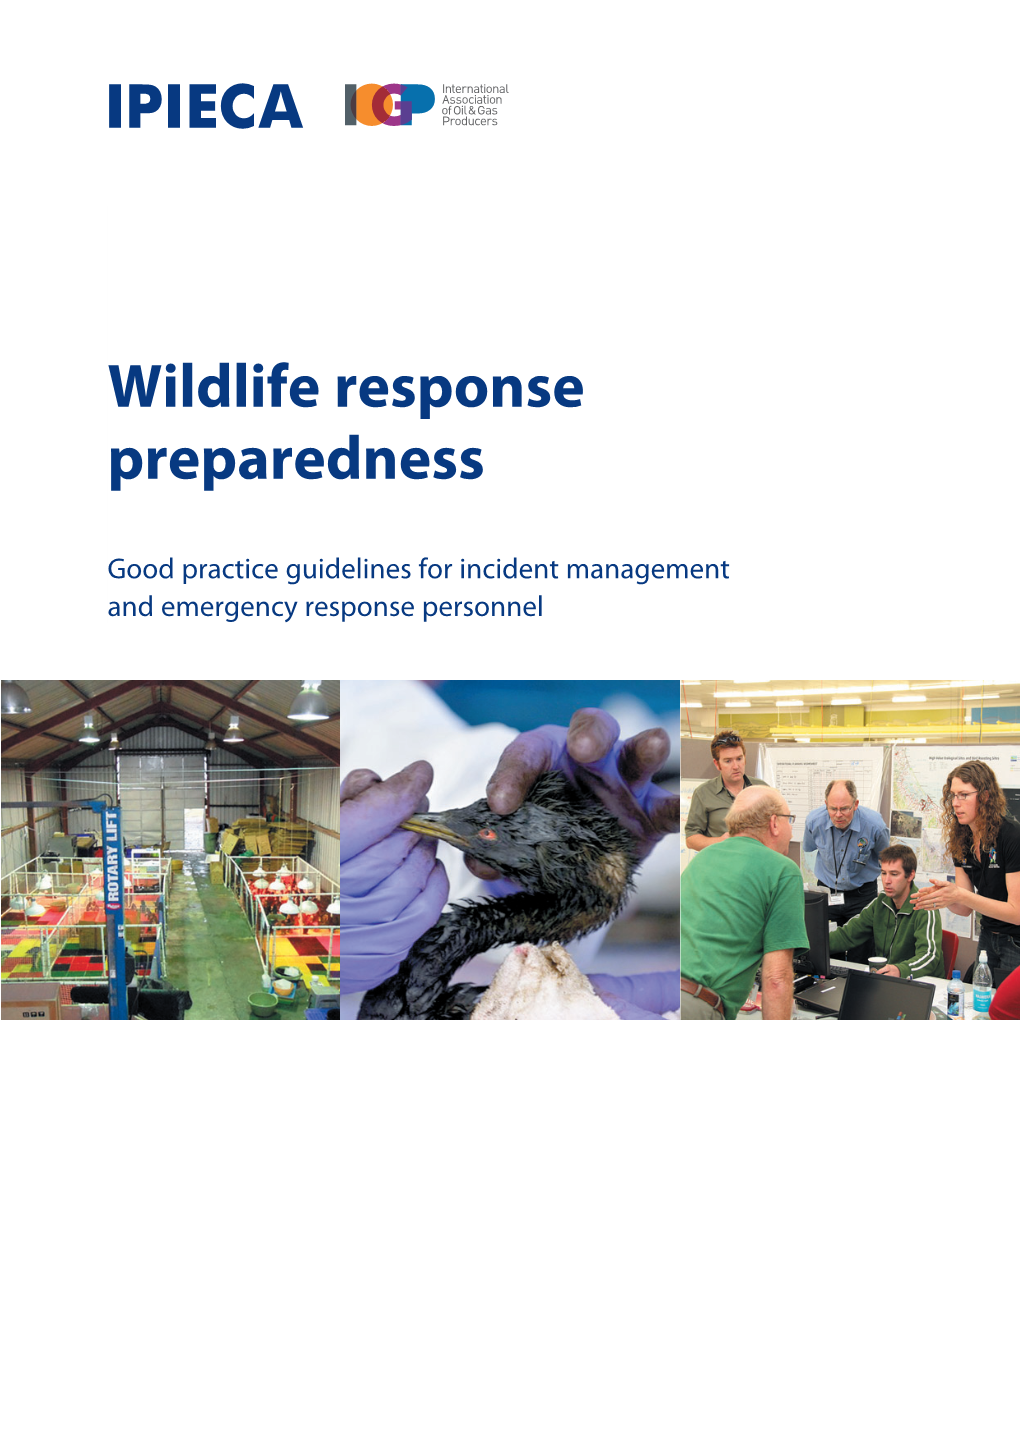 Wildlife Response Preparedness (6 March 2017)